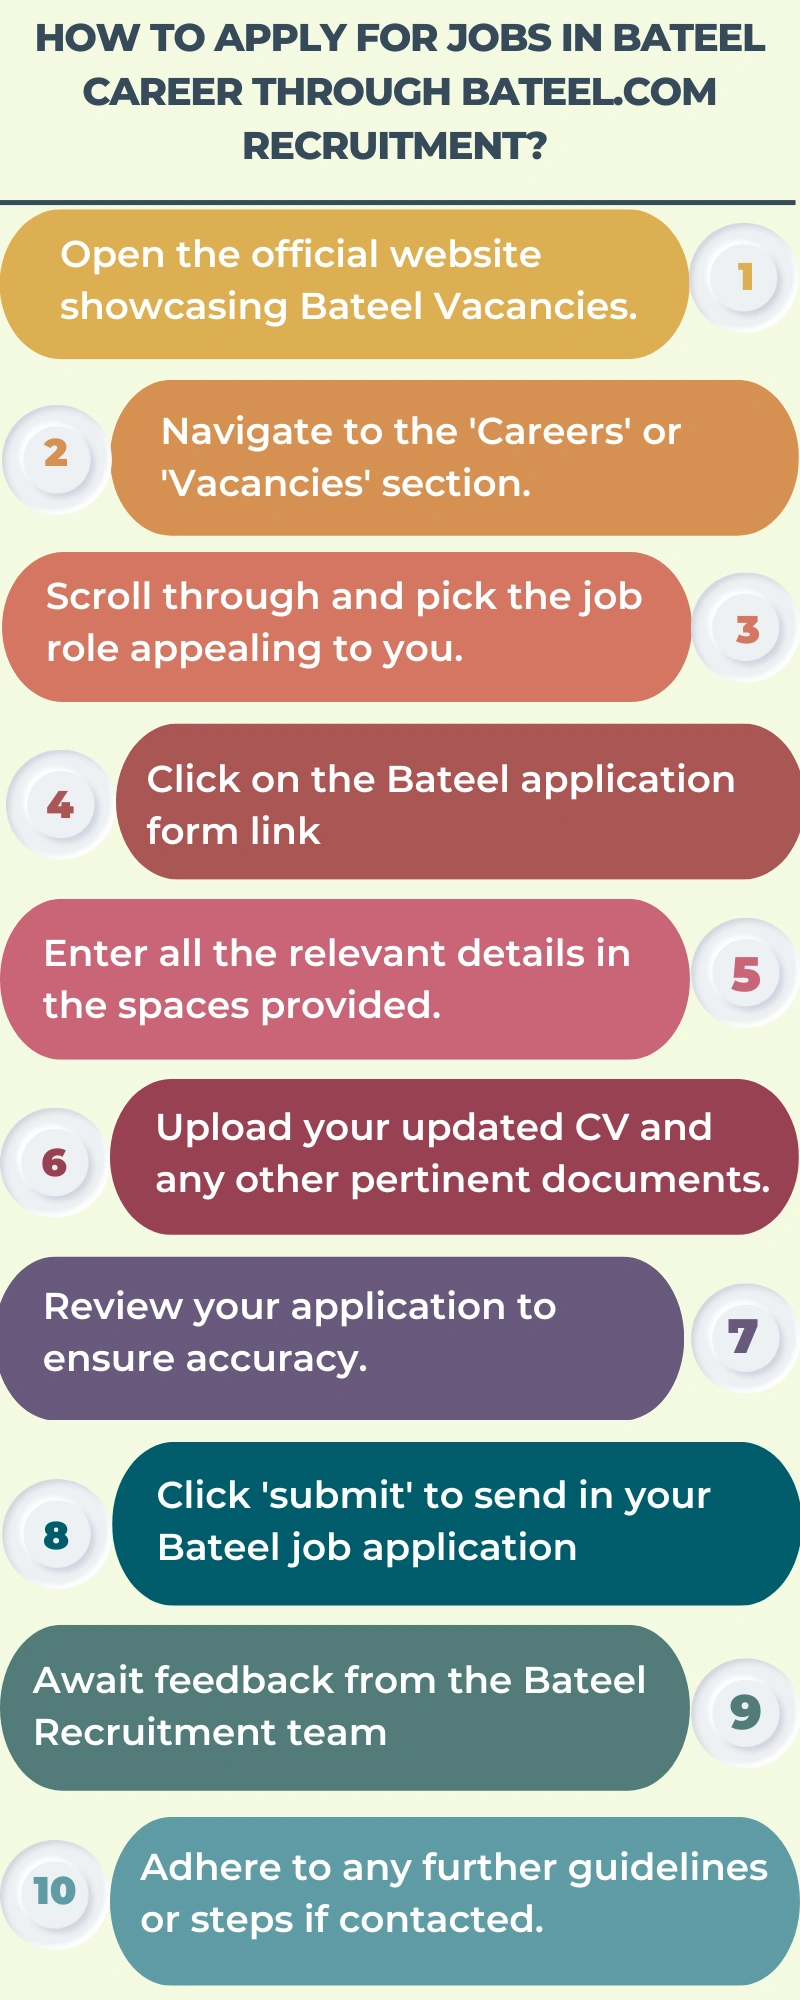 How to Apply for Jobs in Bateel Career through bateel.com recruitment?